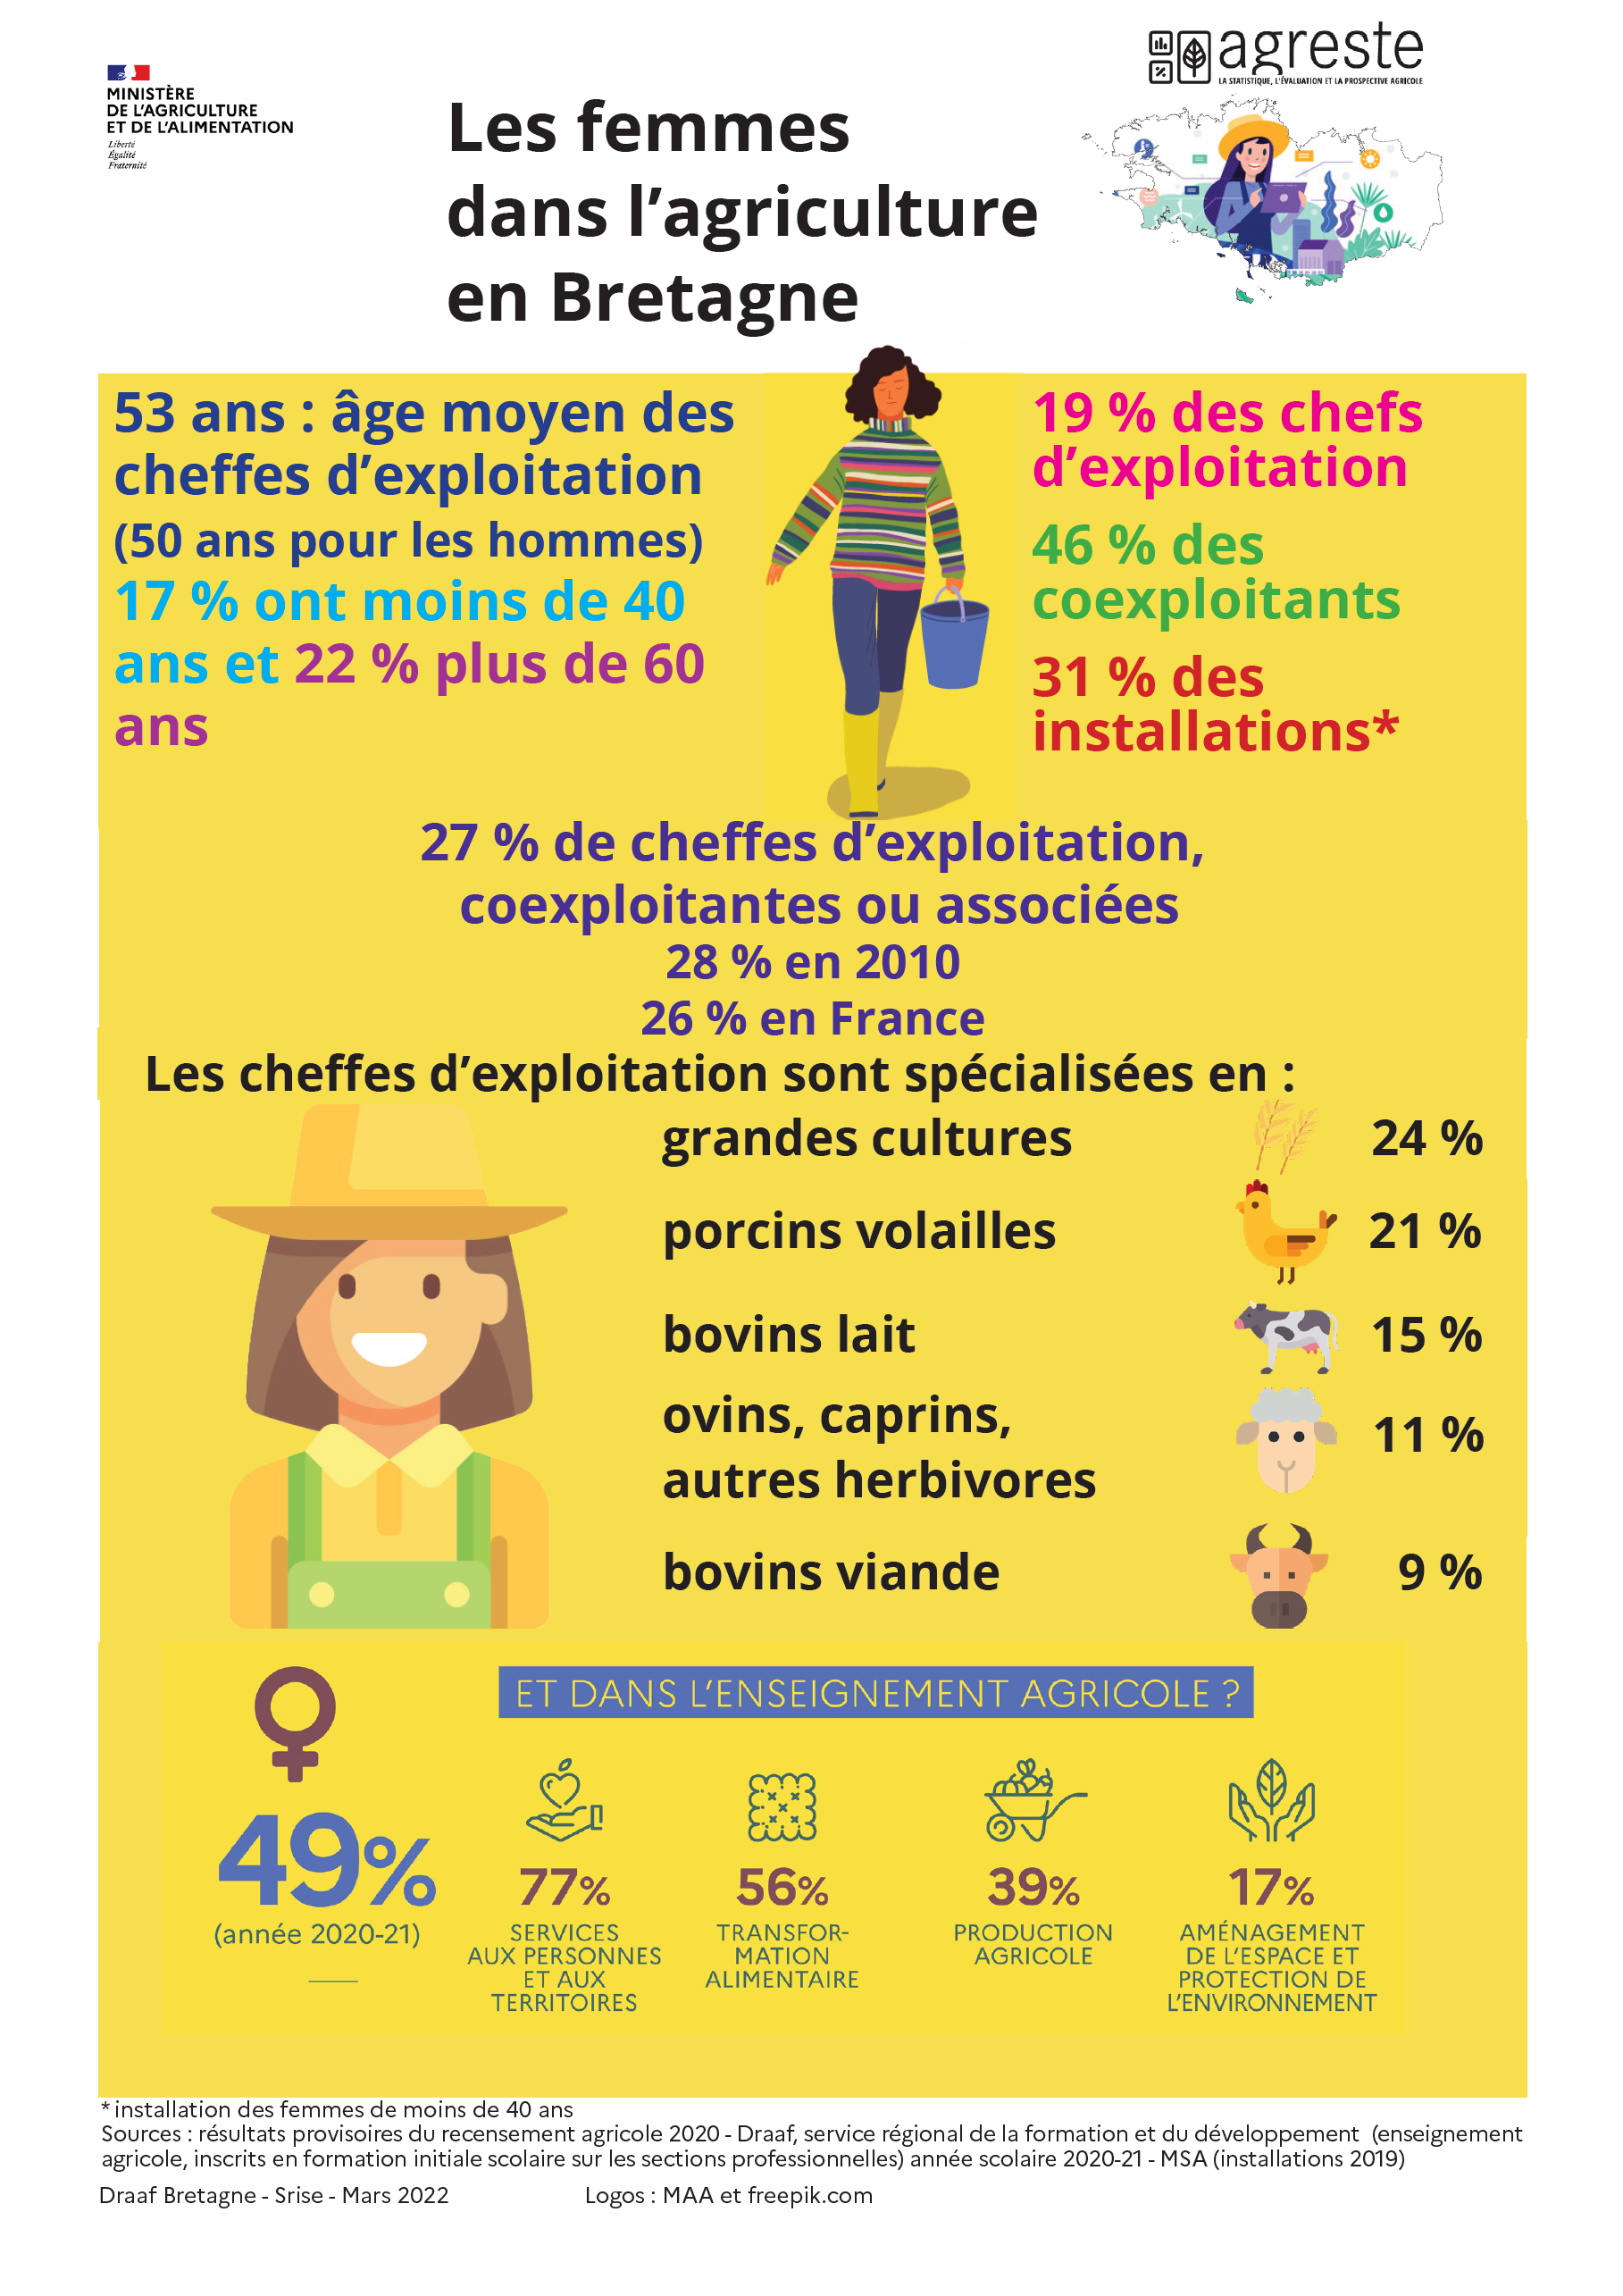 Les femmes en agriculture en Bretagne